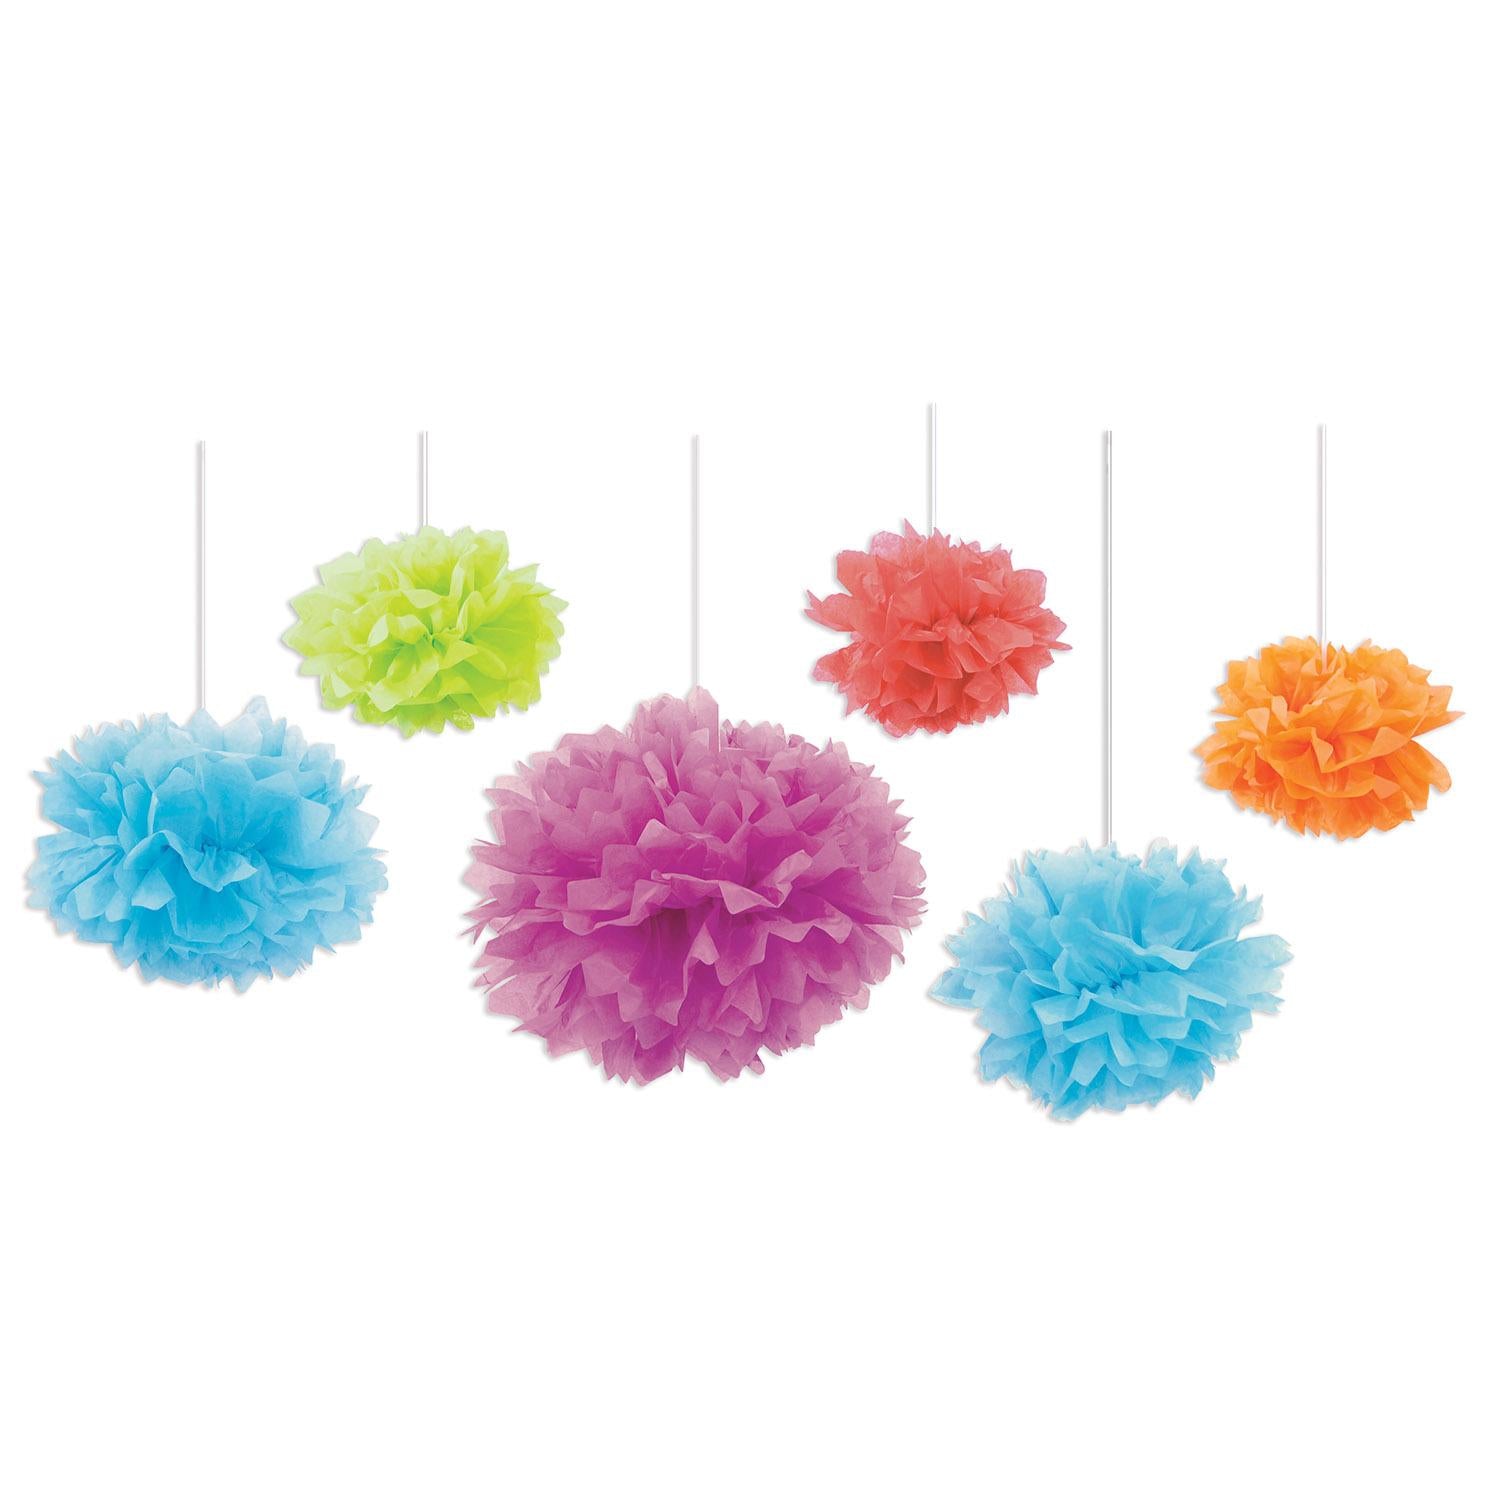 Beistle Tissue Fluff Balls - Assorted colors (6/Pkg)